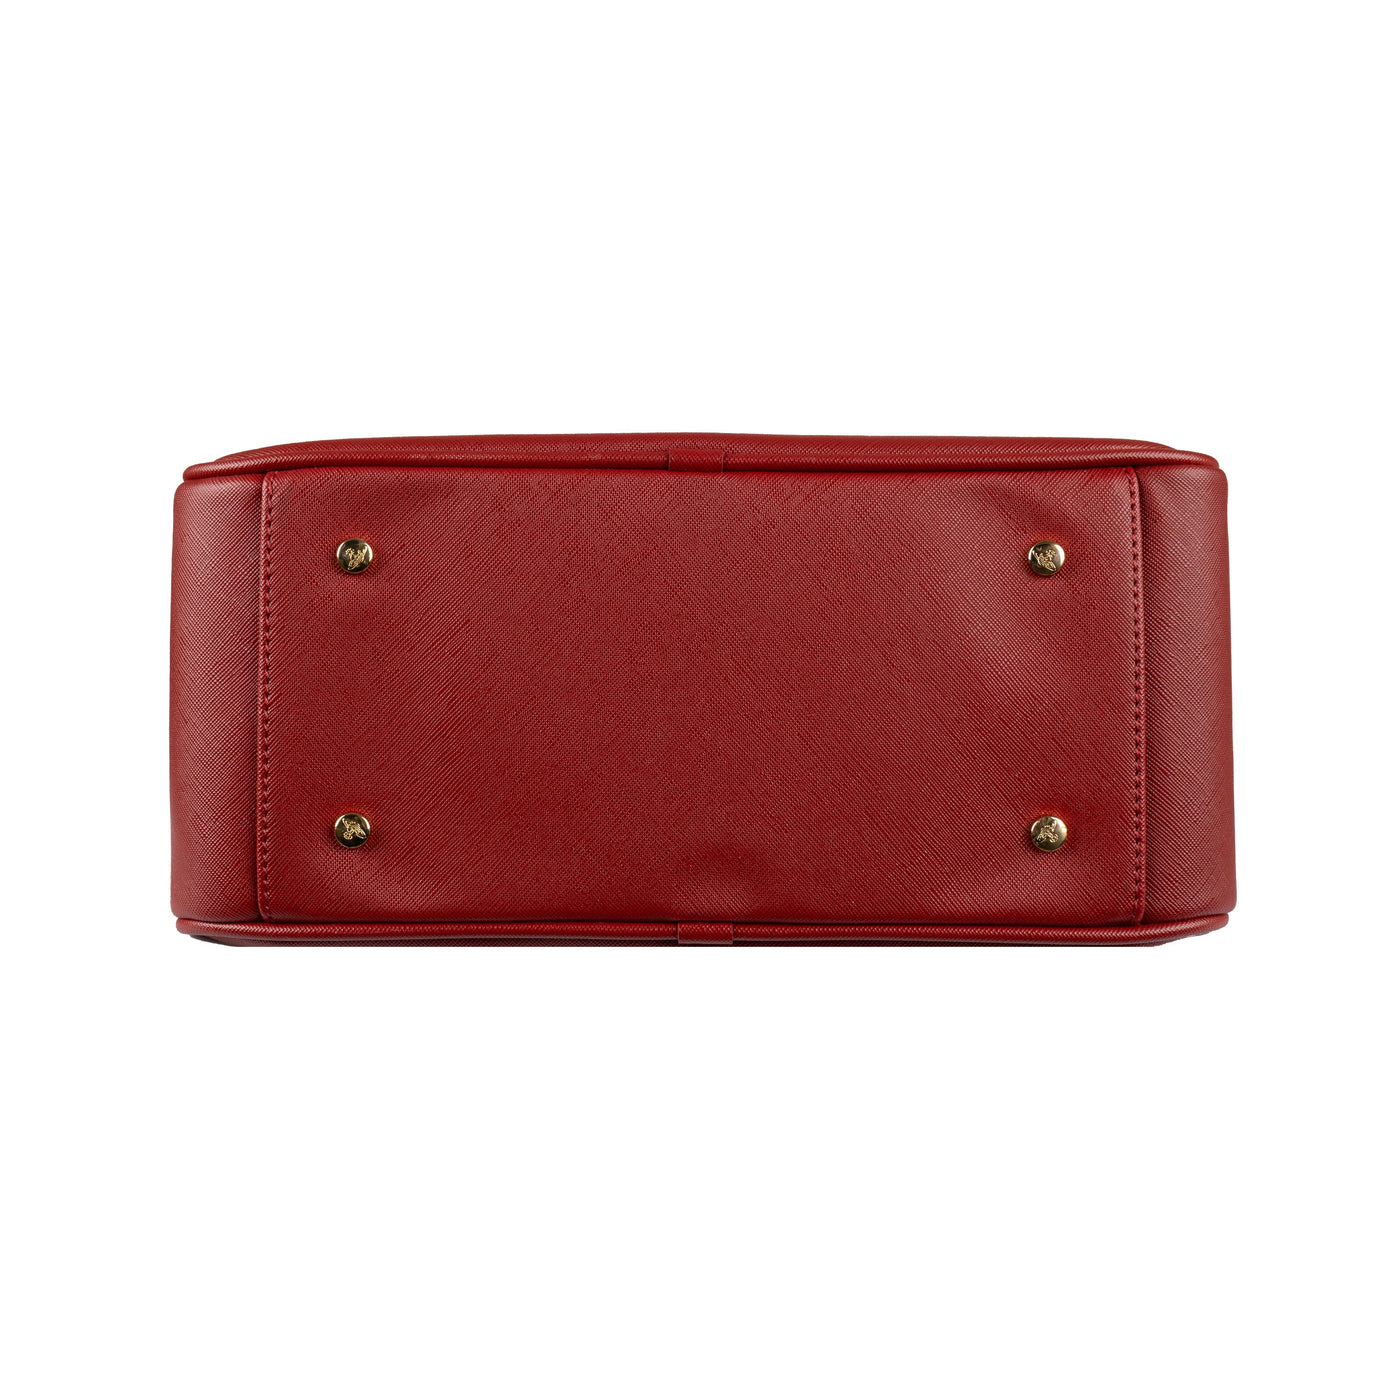 Secondhand Vivienne Westwood Anglomania Divina Red Handbag